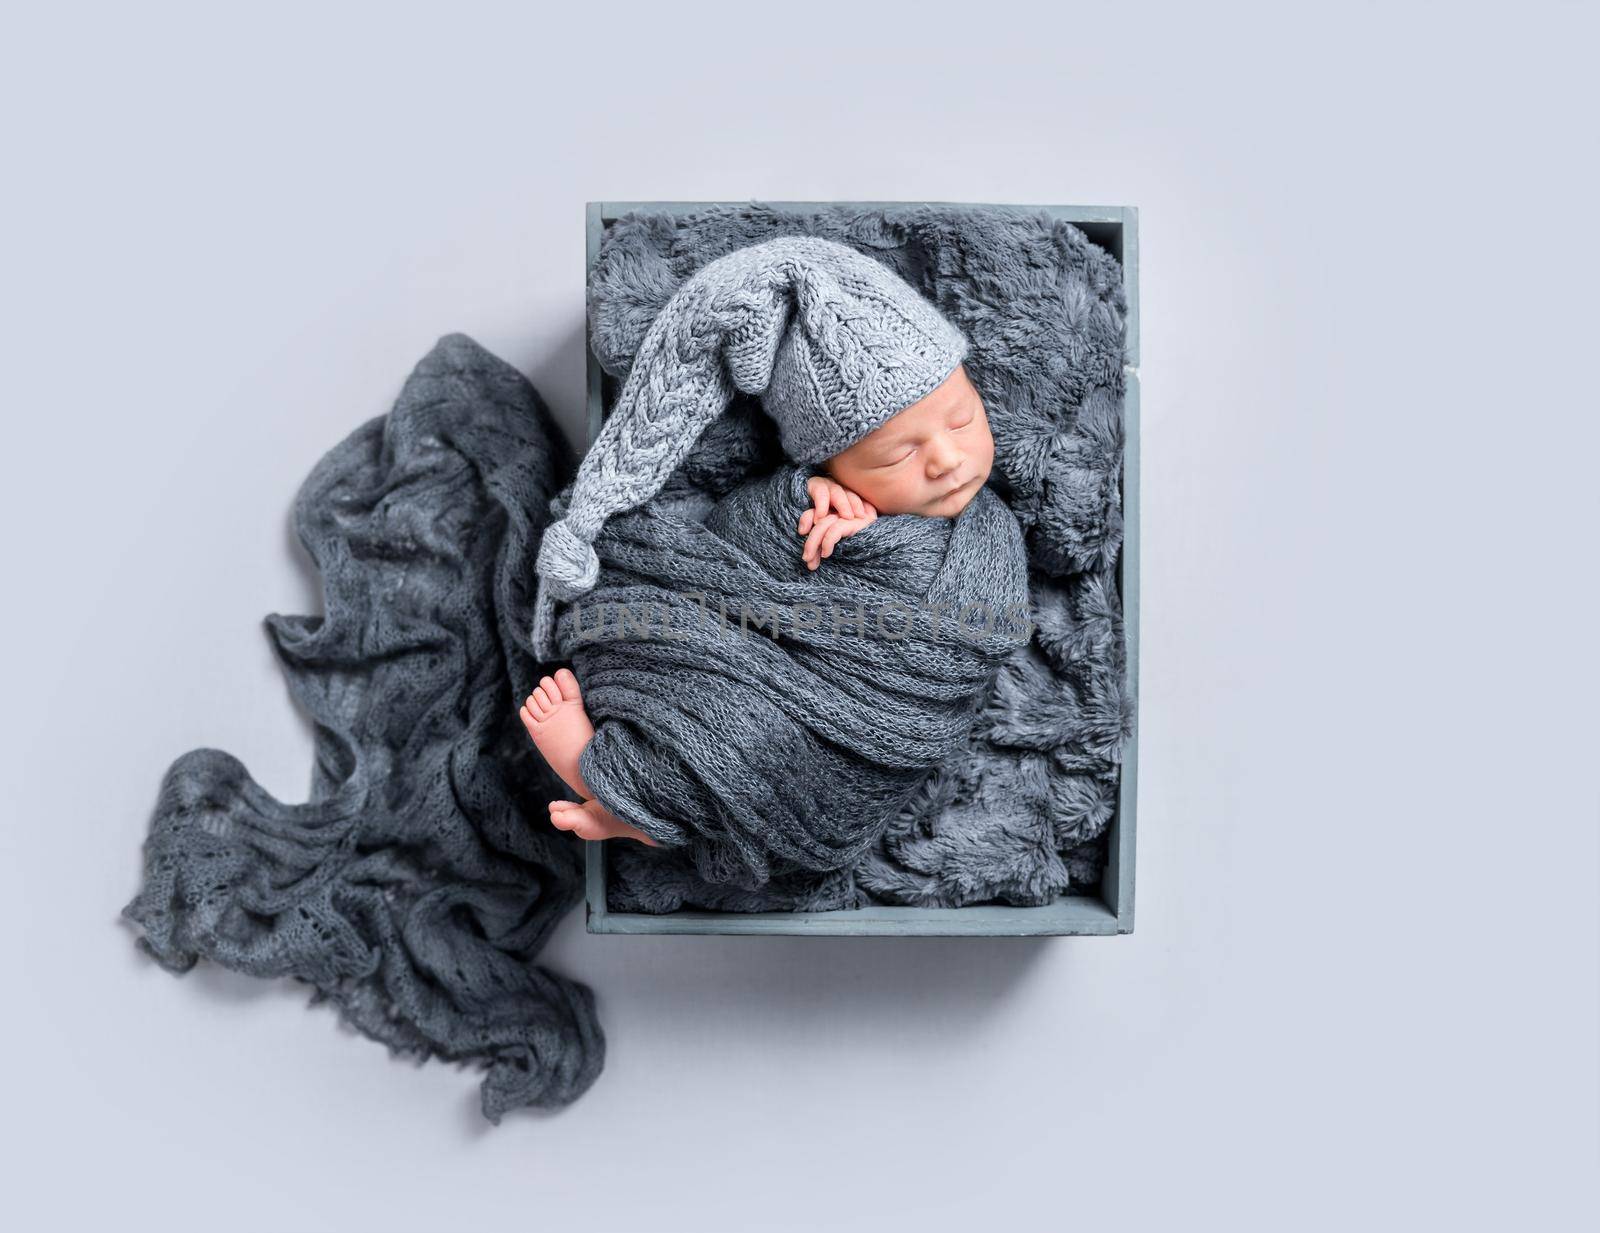 Newborn covered with dark blanket, topview by tan4ikk1